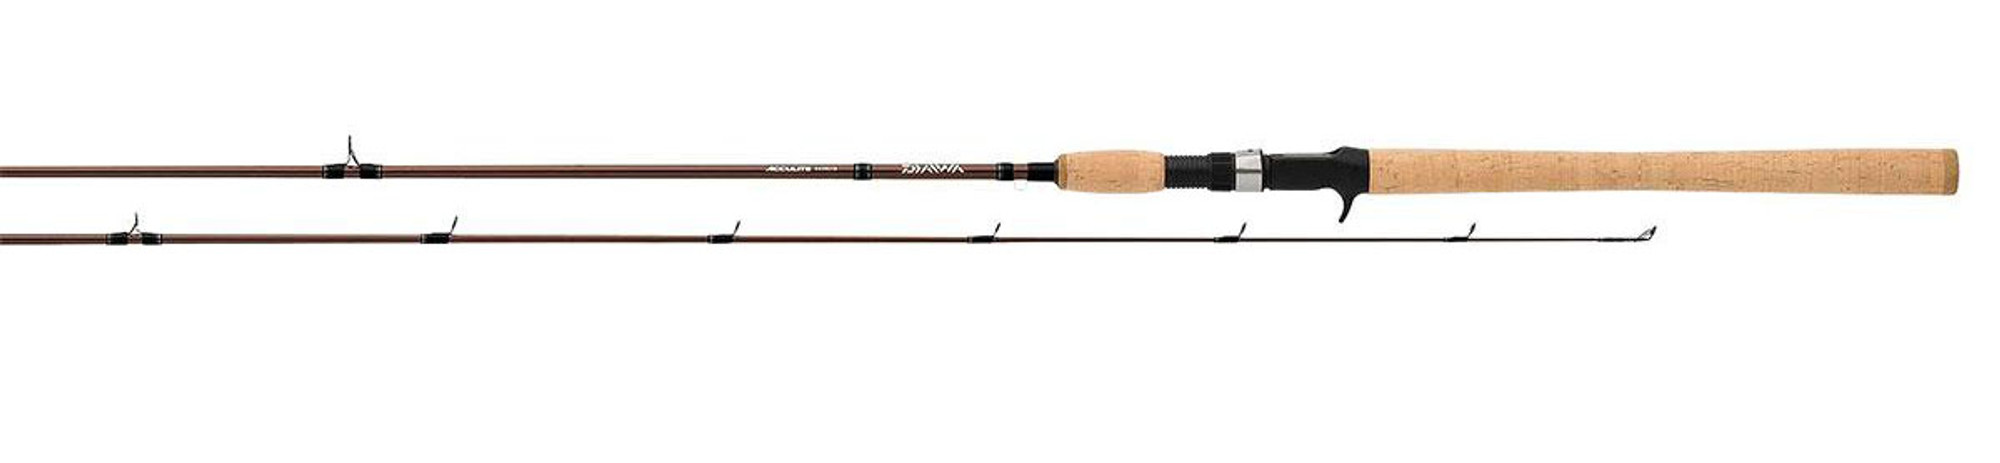 Daiwa Acculite Freshwater Spinning Fishing Rod (Model: ACLT902MFS)